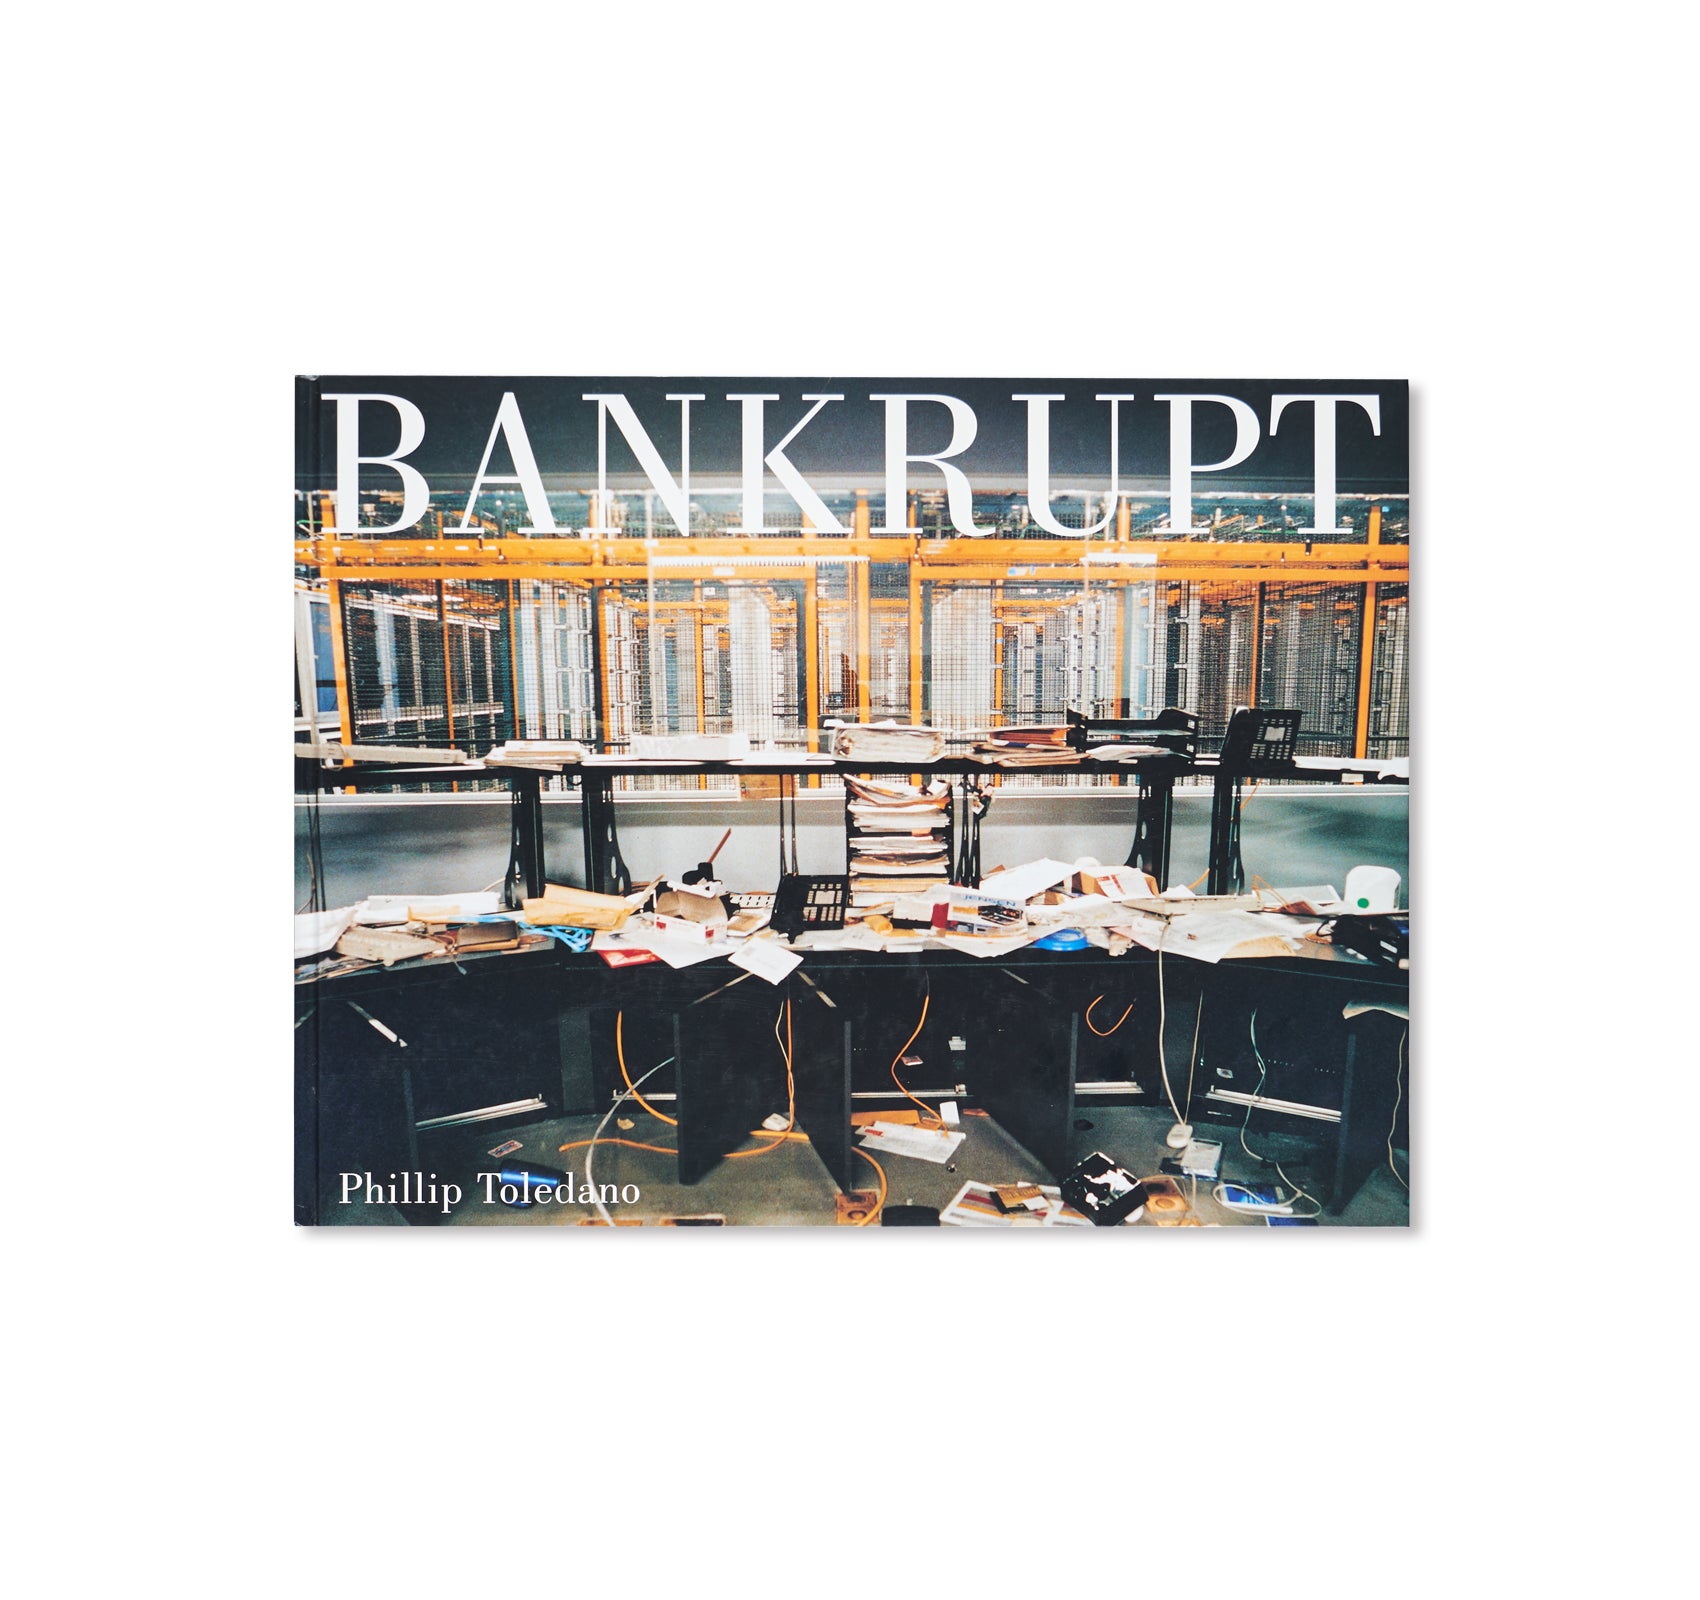 BANKRUPT by Phillip Toledano